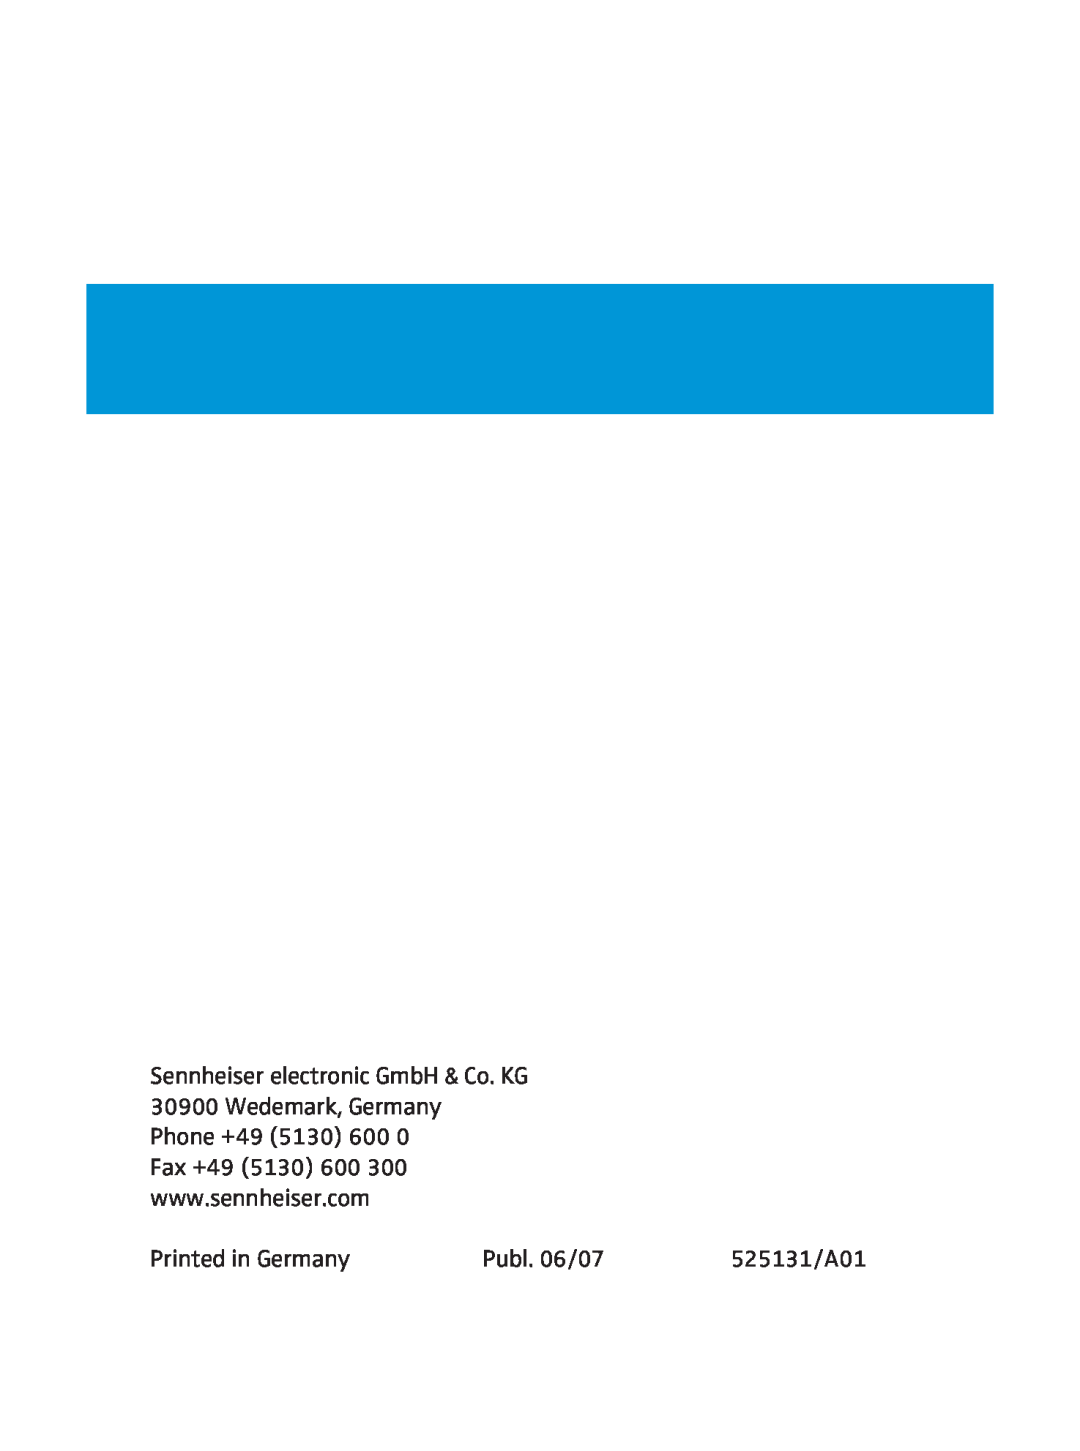 Sennheiser CX 400 manual Printed in Germany, Publ. 06/07, 525131/A01 